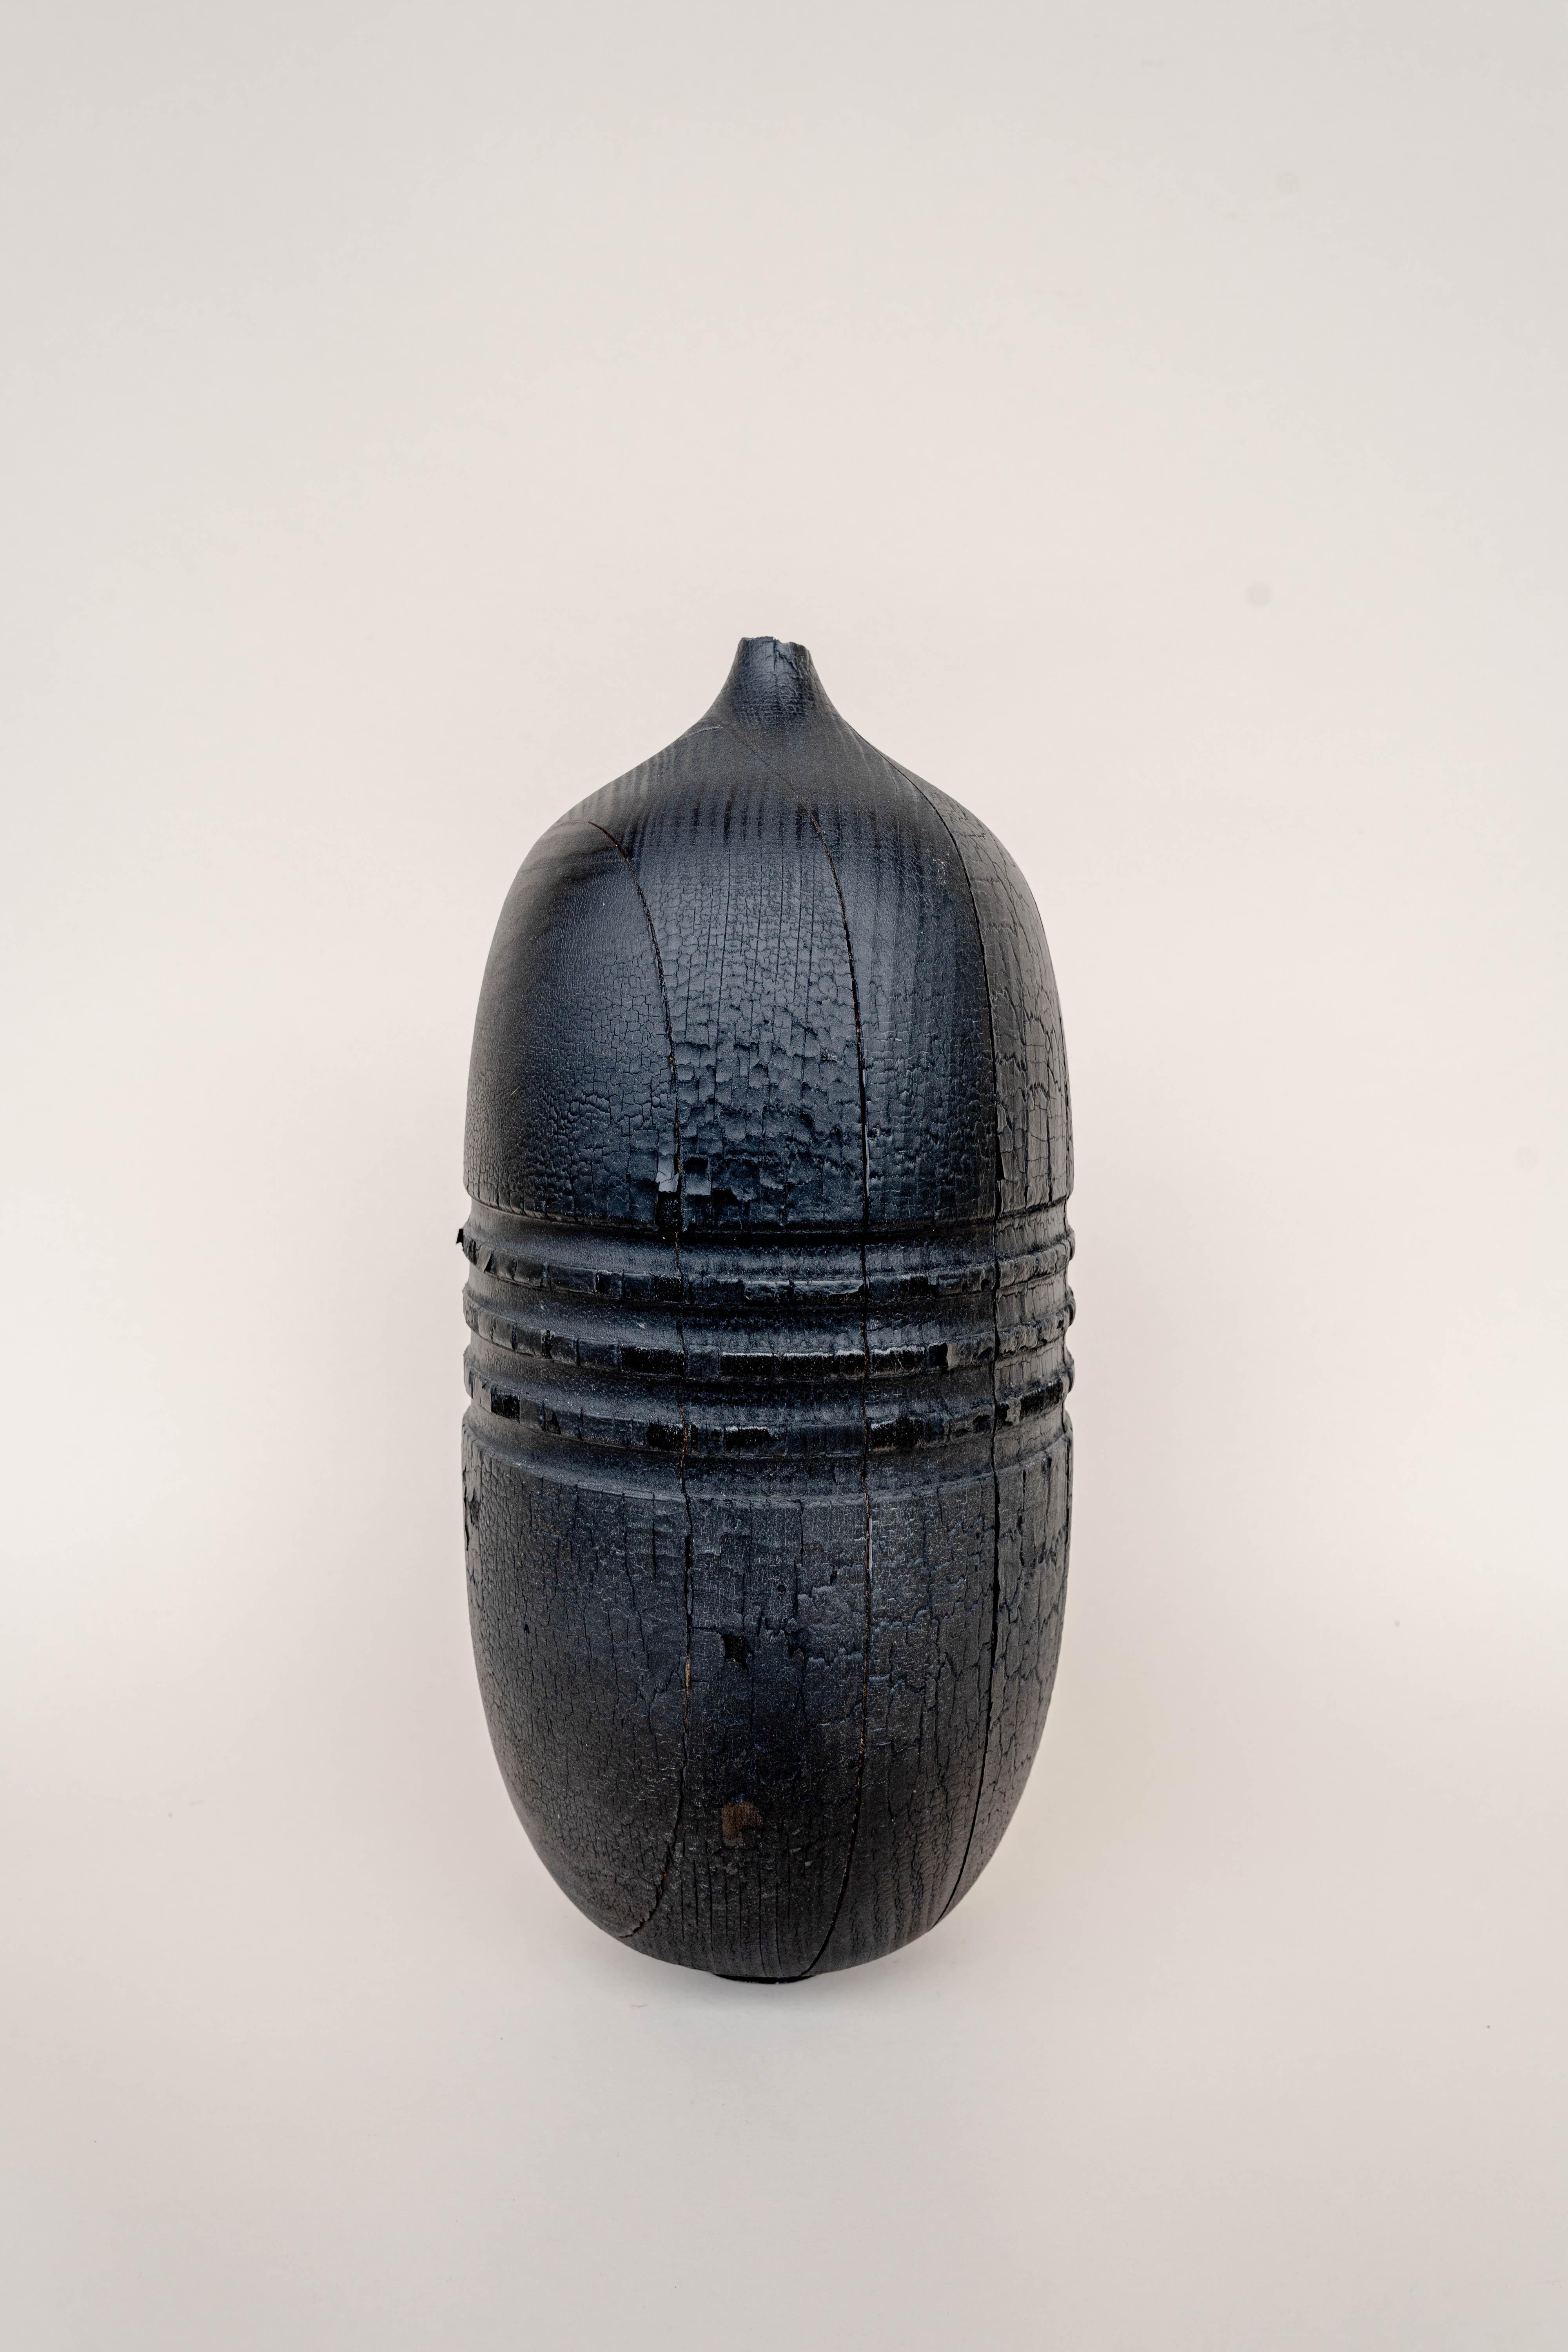 Bois Vase XL #2 de Daniel Elkayam en vente